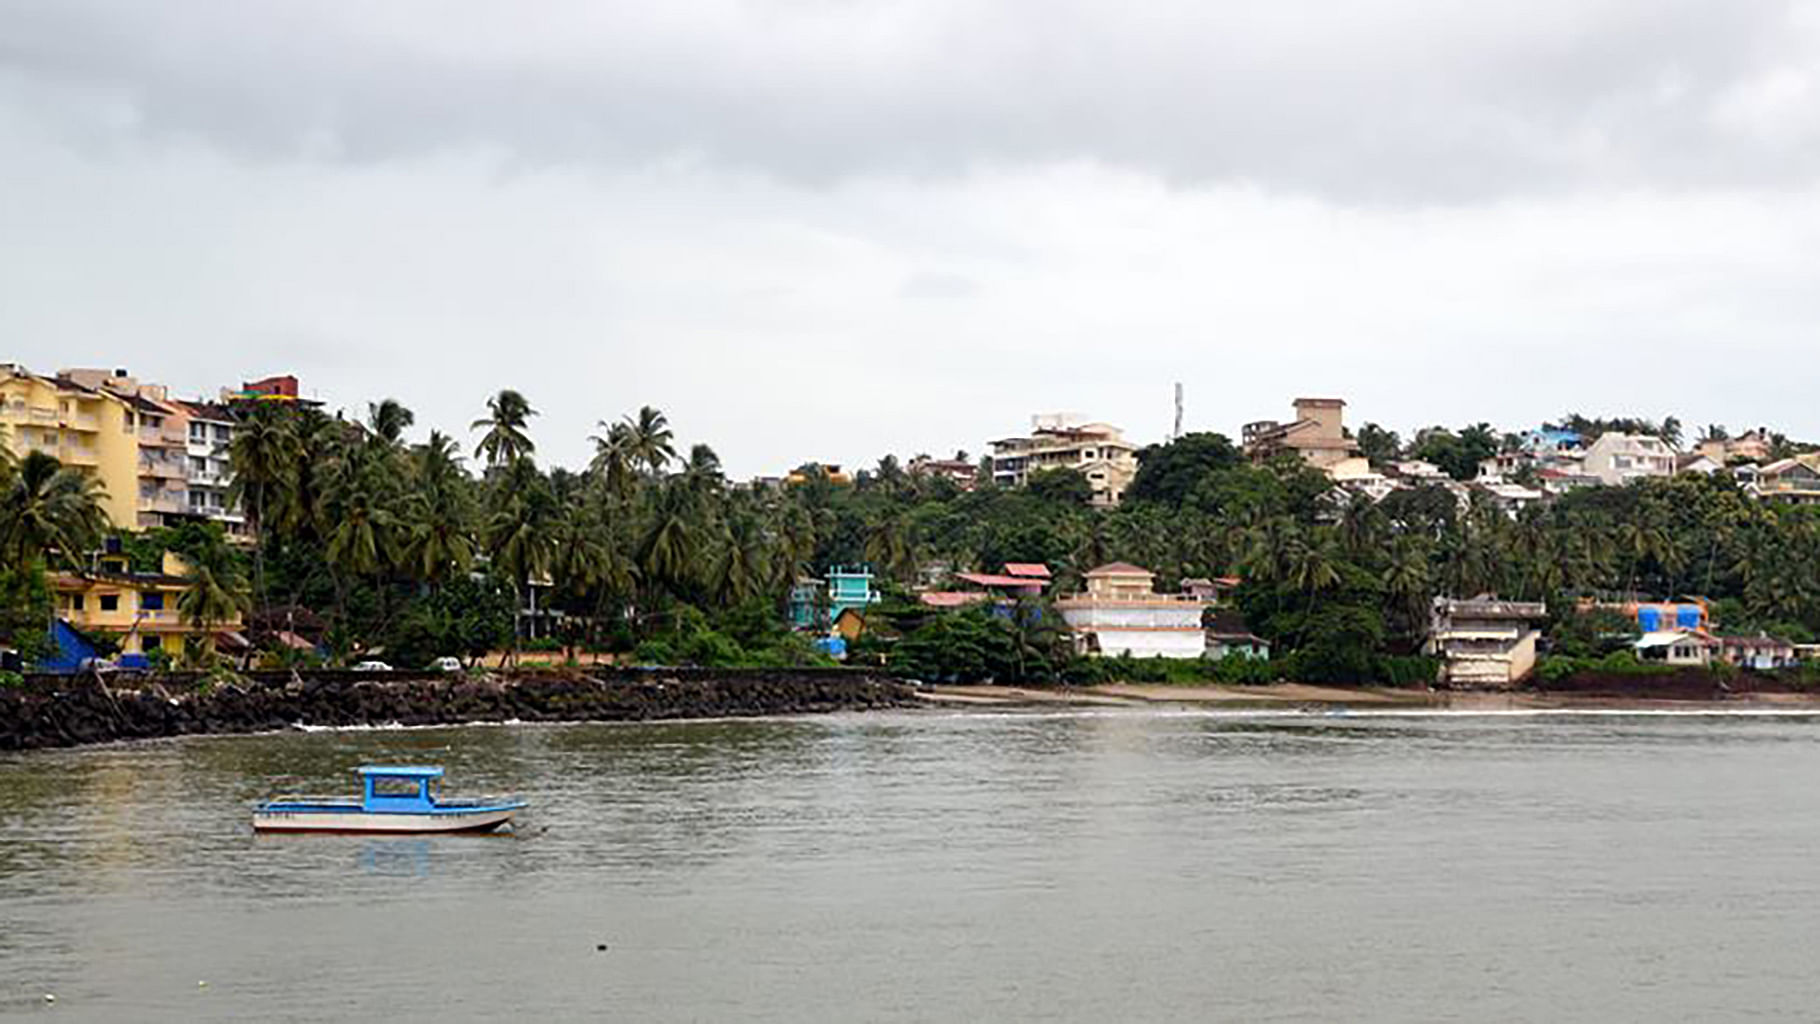 The coastal beauty of Goa. (Photo: <a href="https://www.facebook.com/1647162832218400/photos/pb.1647162832218400.-2207520000.1452500042./1653363911598292/?type=3&amp;theater ">Facebook</a>/Goa)